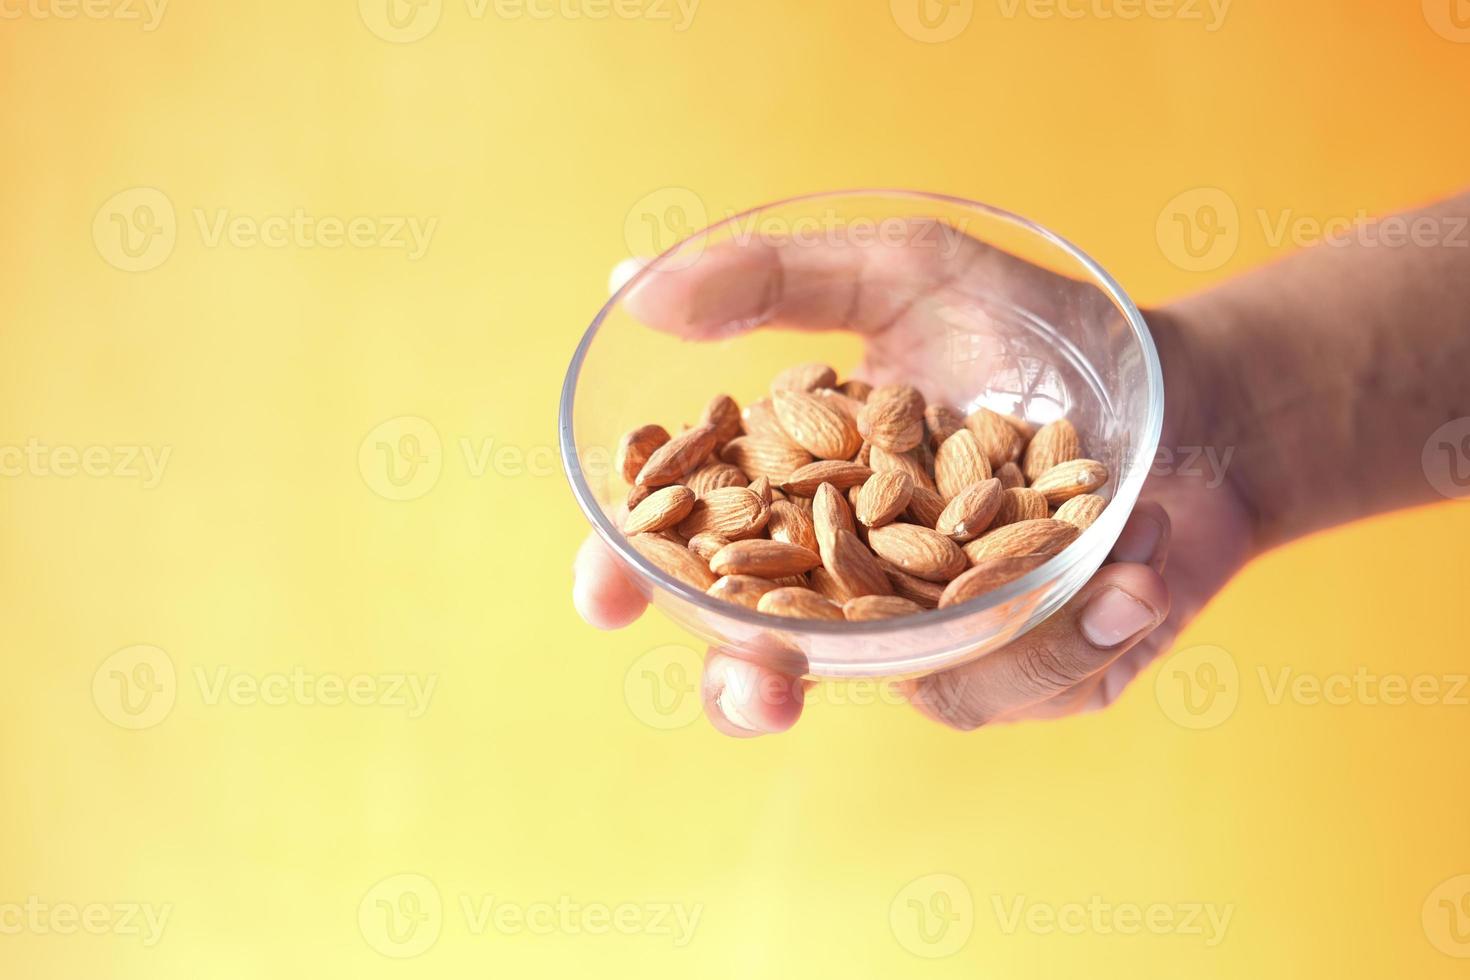 Bowl of almonds photo